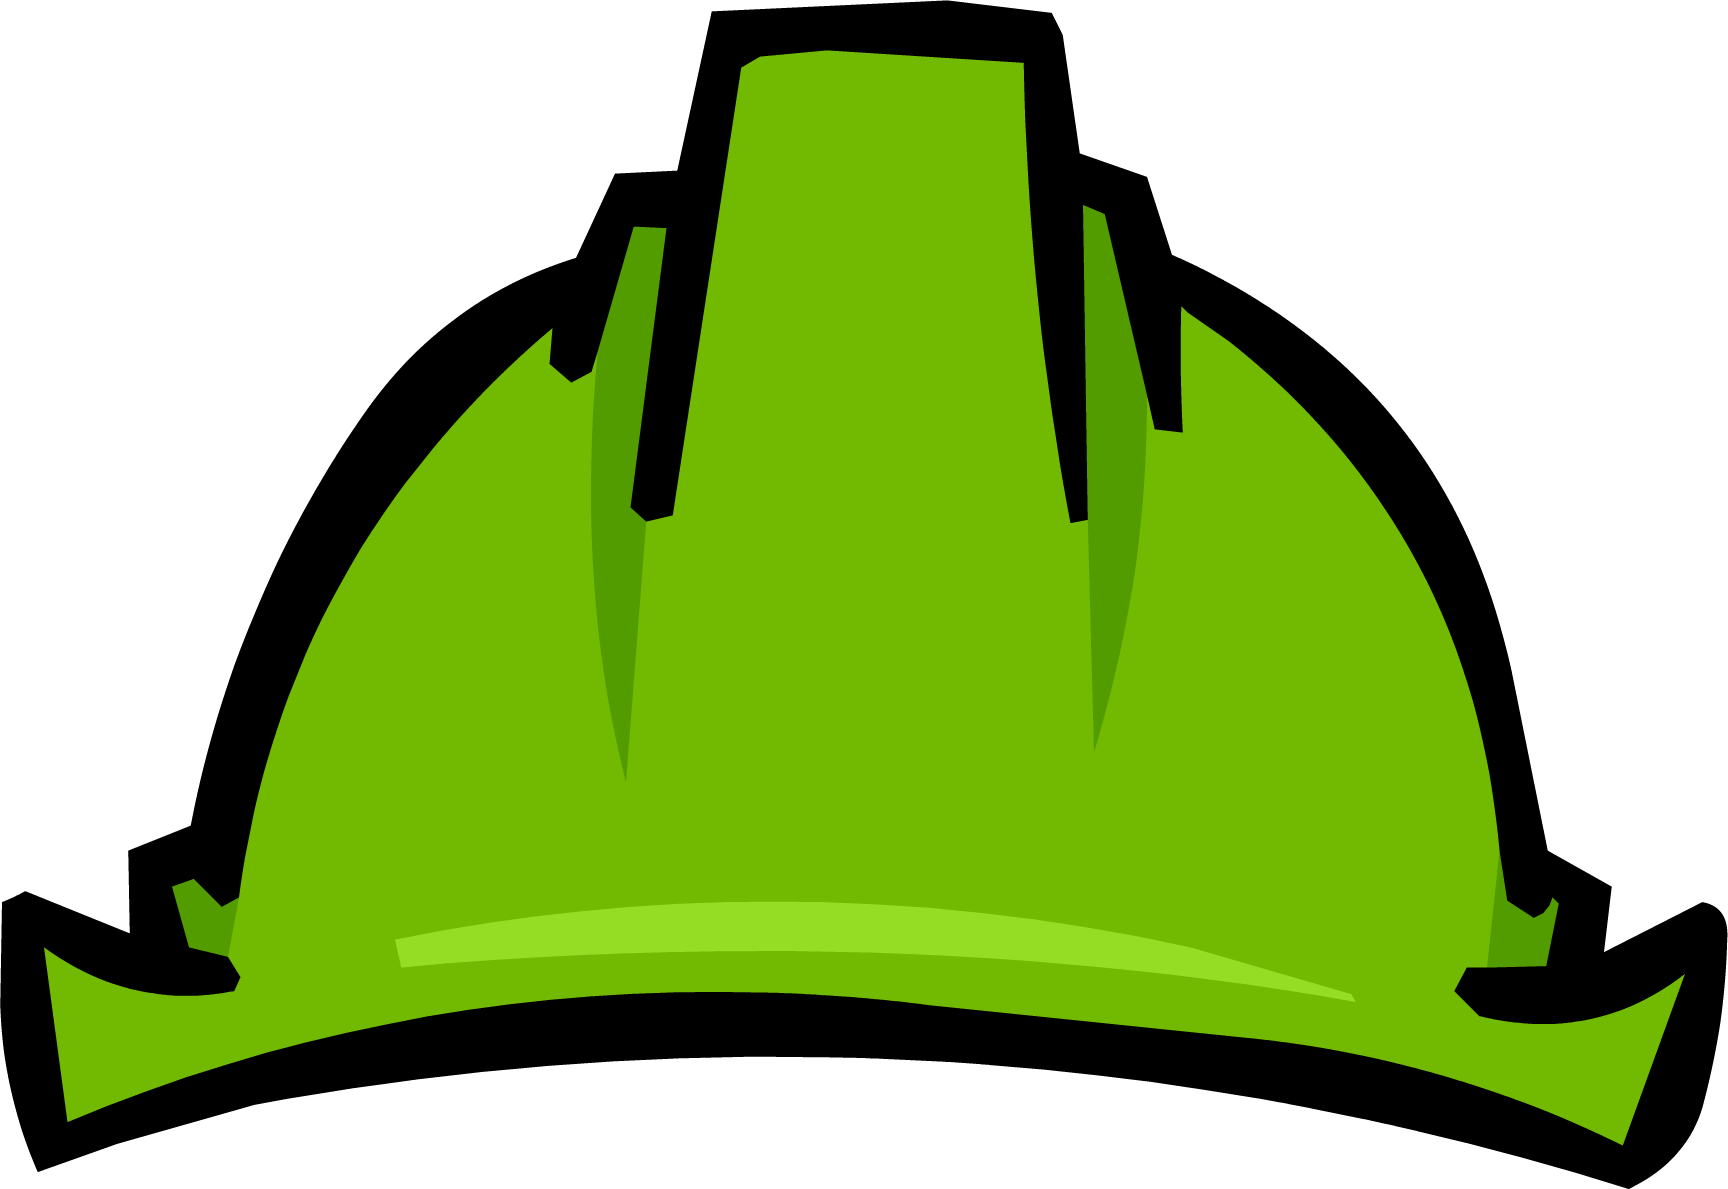 Green Hard Hat - Club Penguin Wiki - The free, editable ...